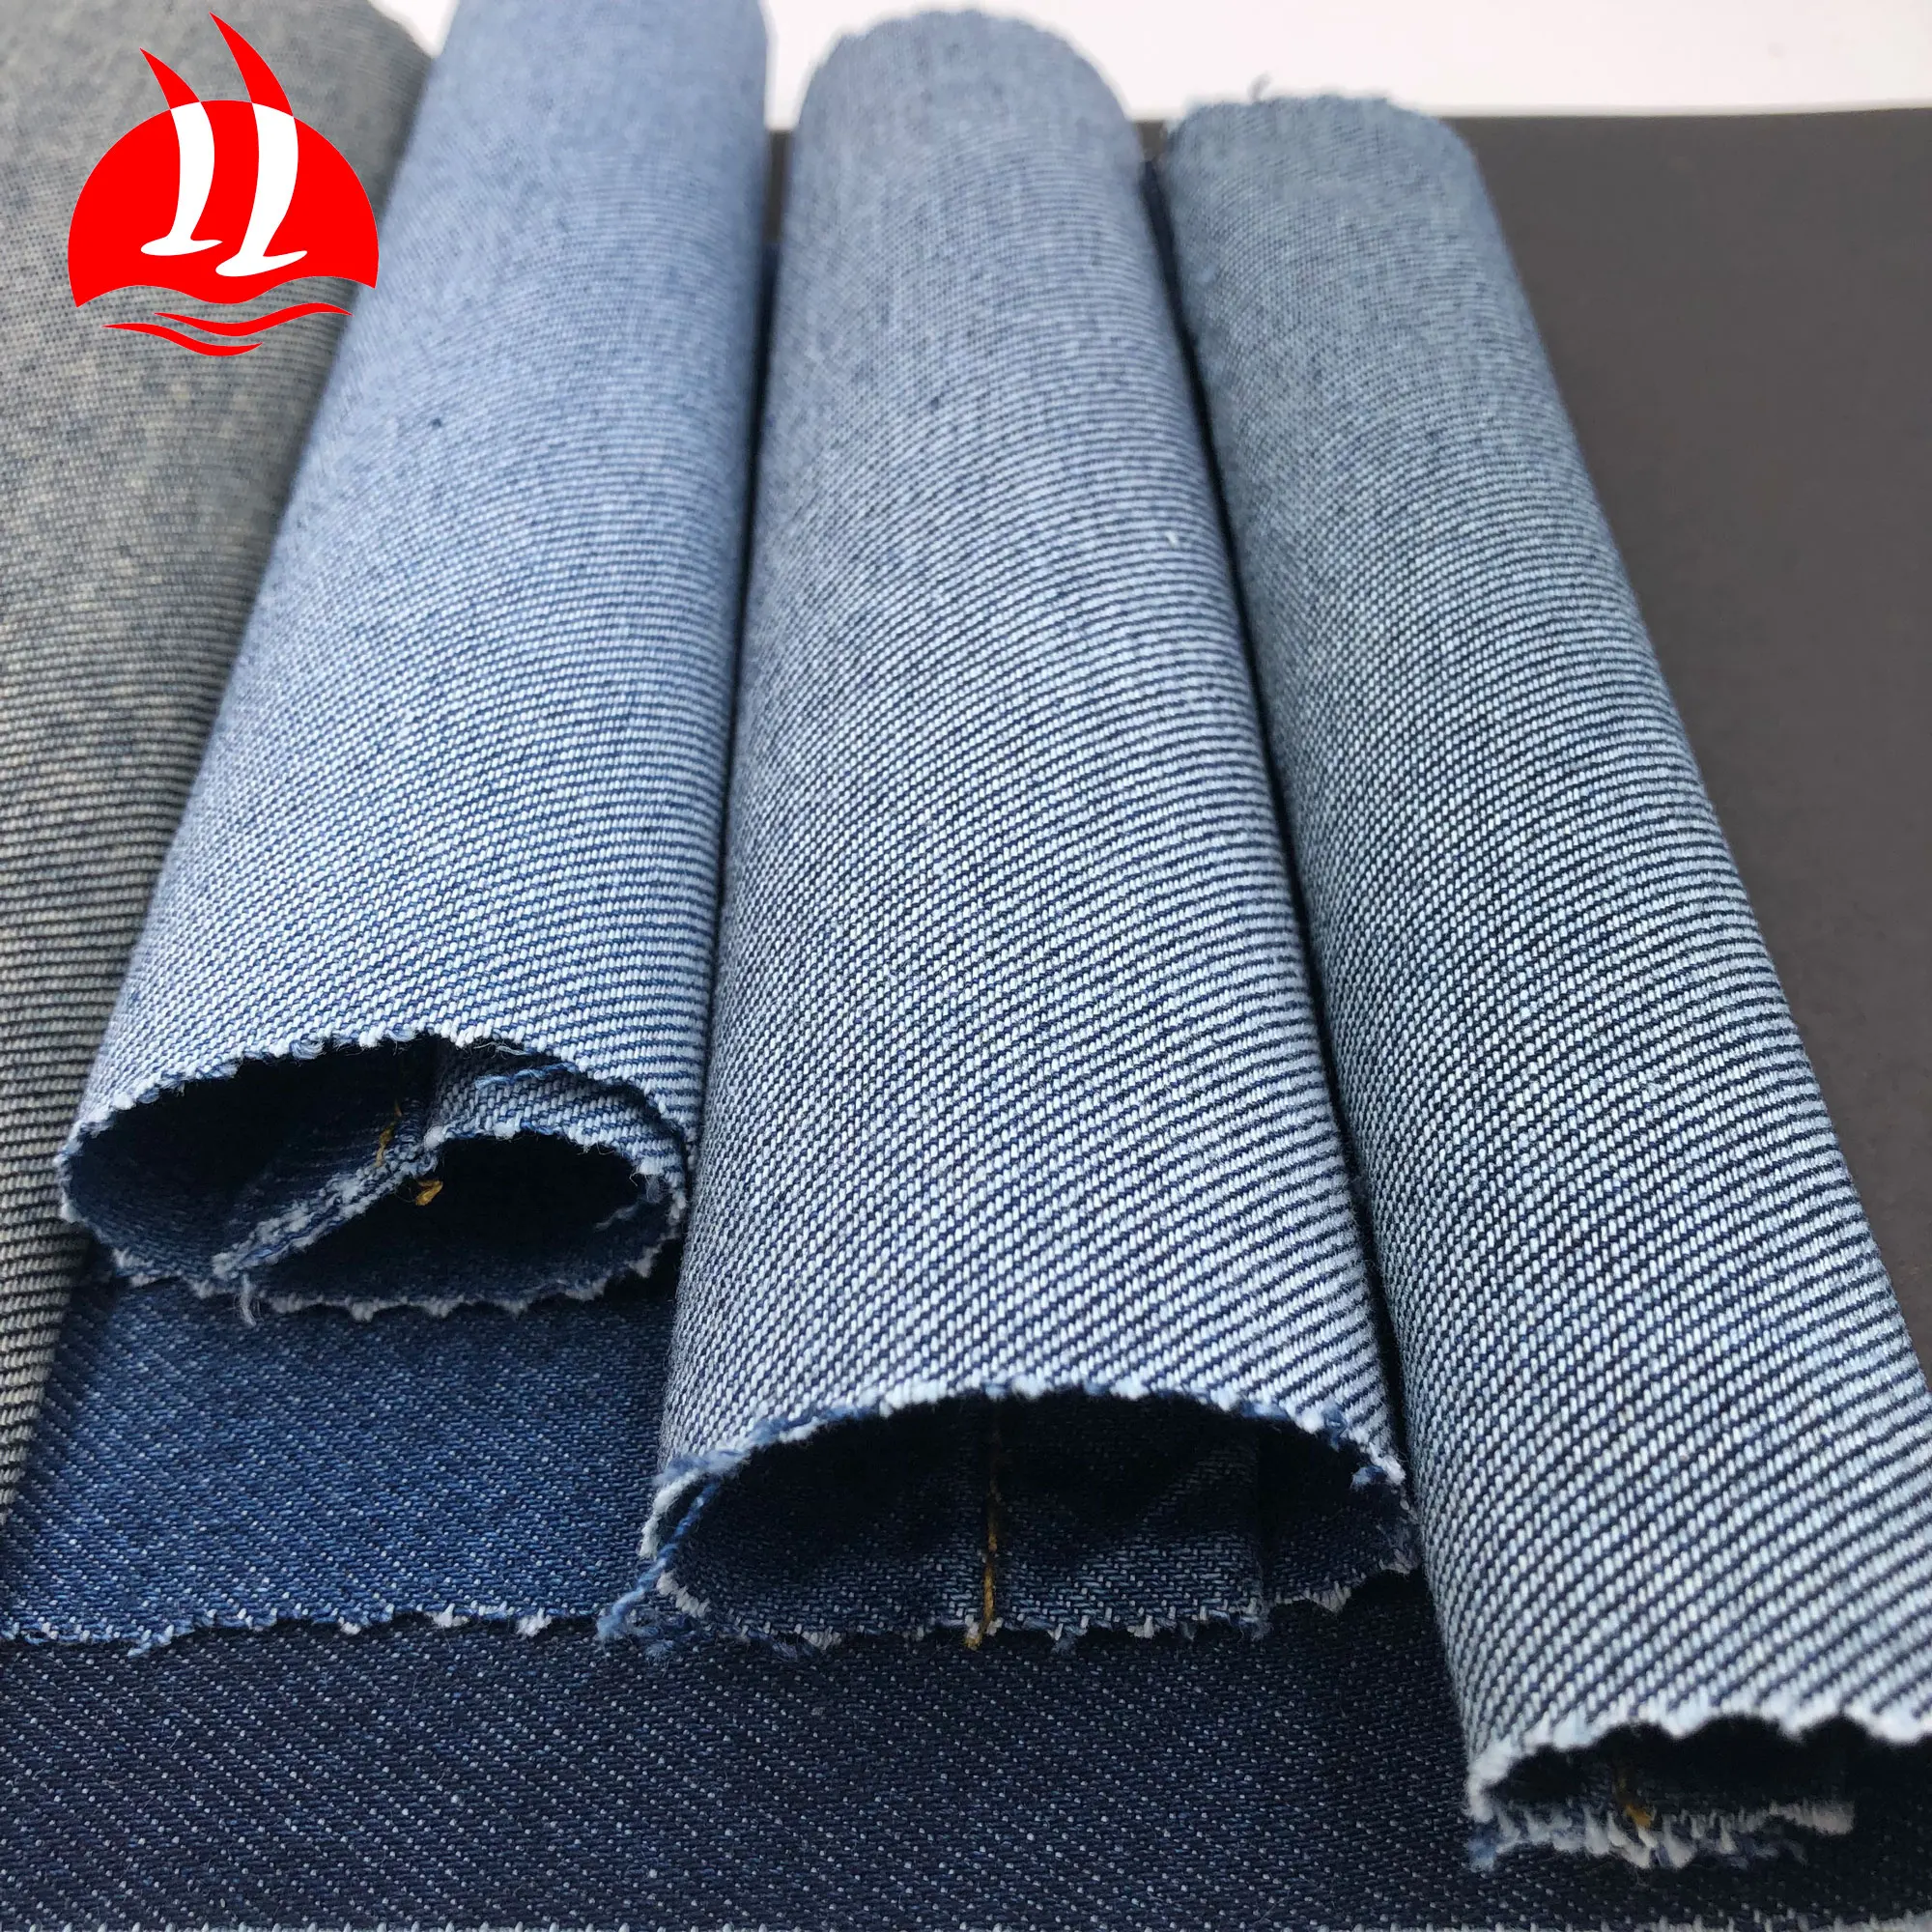 11.8oz Professional Hemp Denim Fabric Textile Made In China - Buy Hemp ...